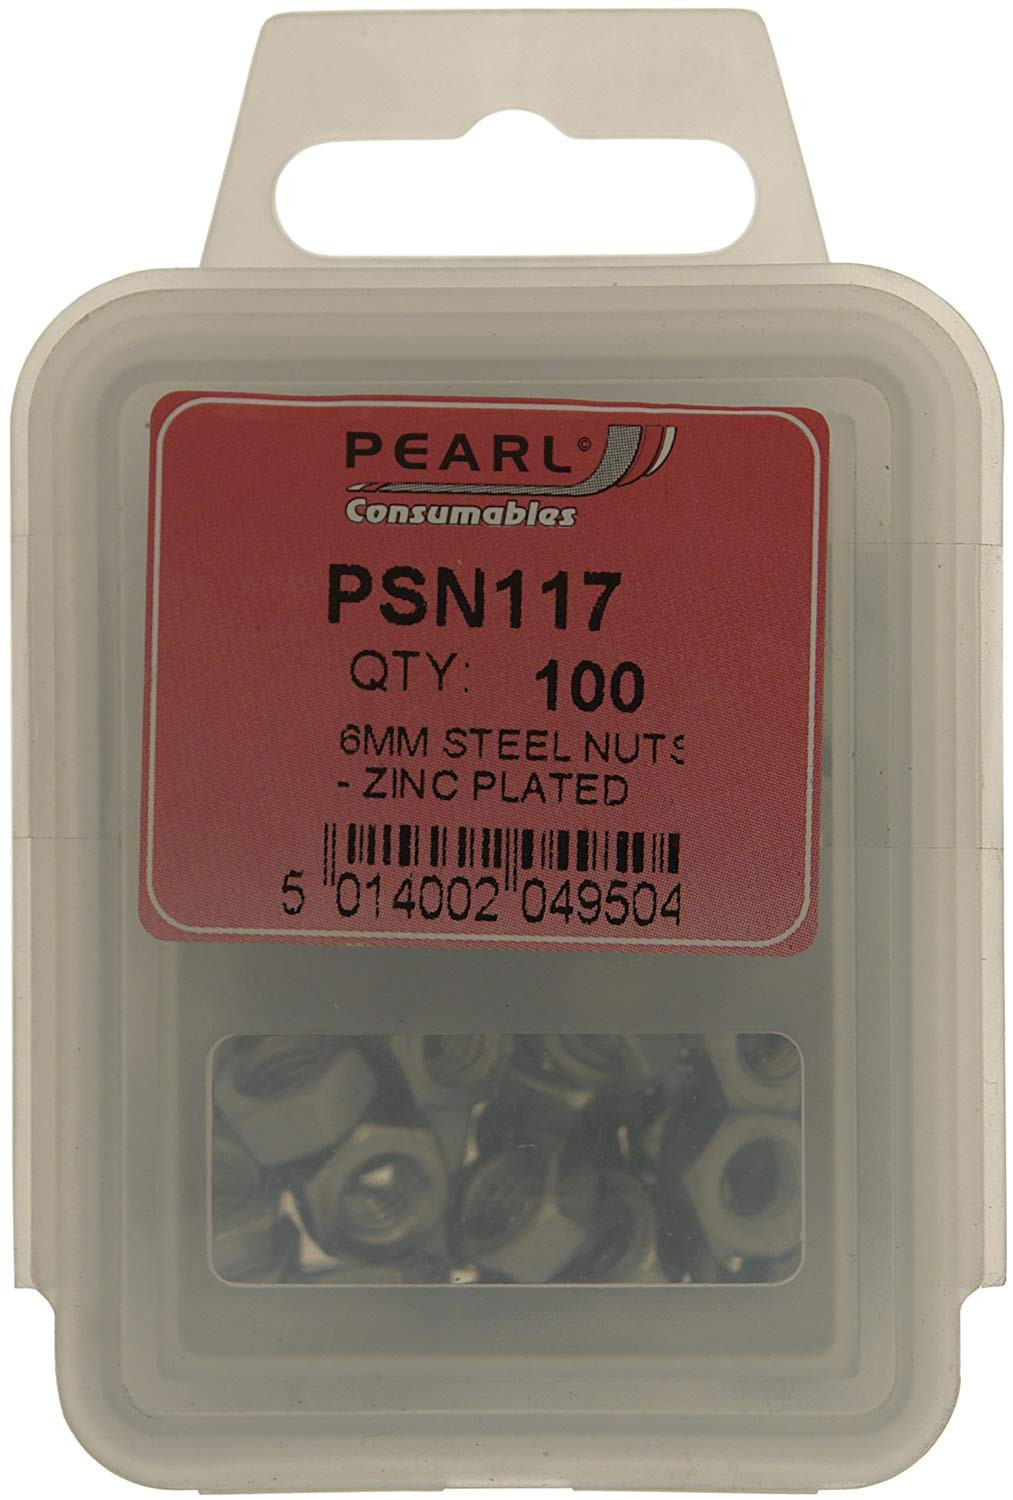 steel nuts-zinc plated 6mm